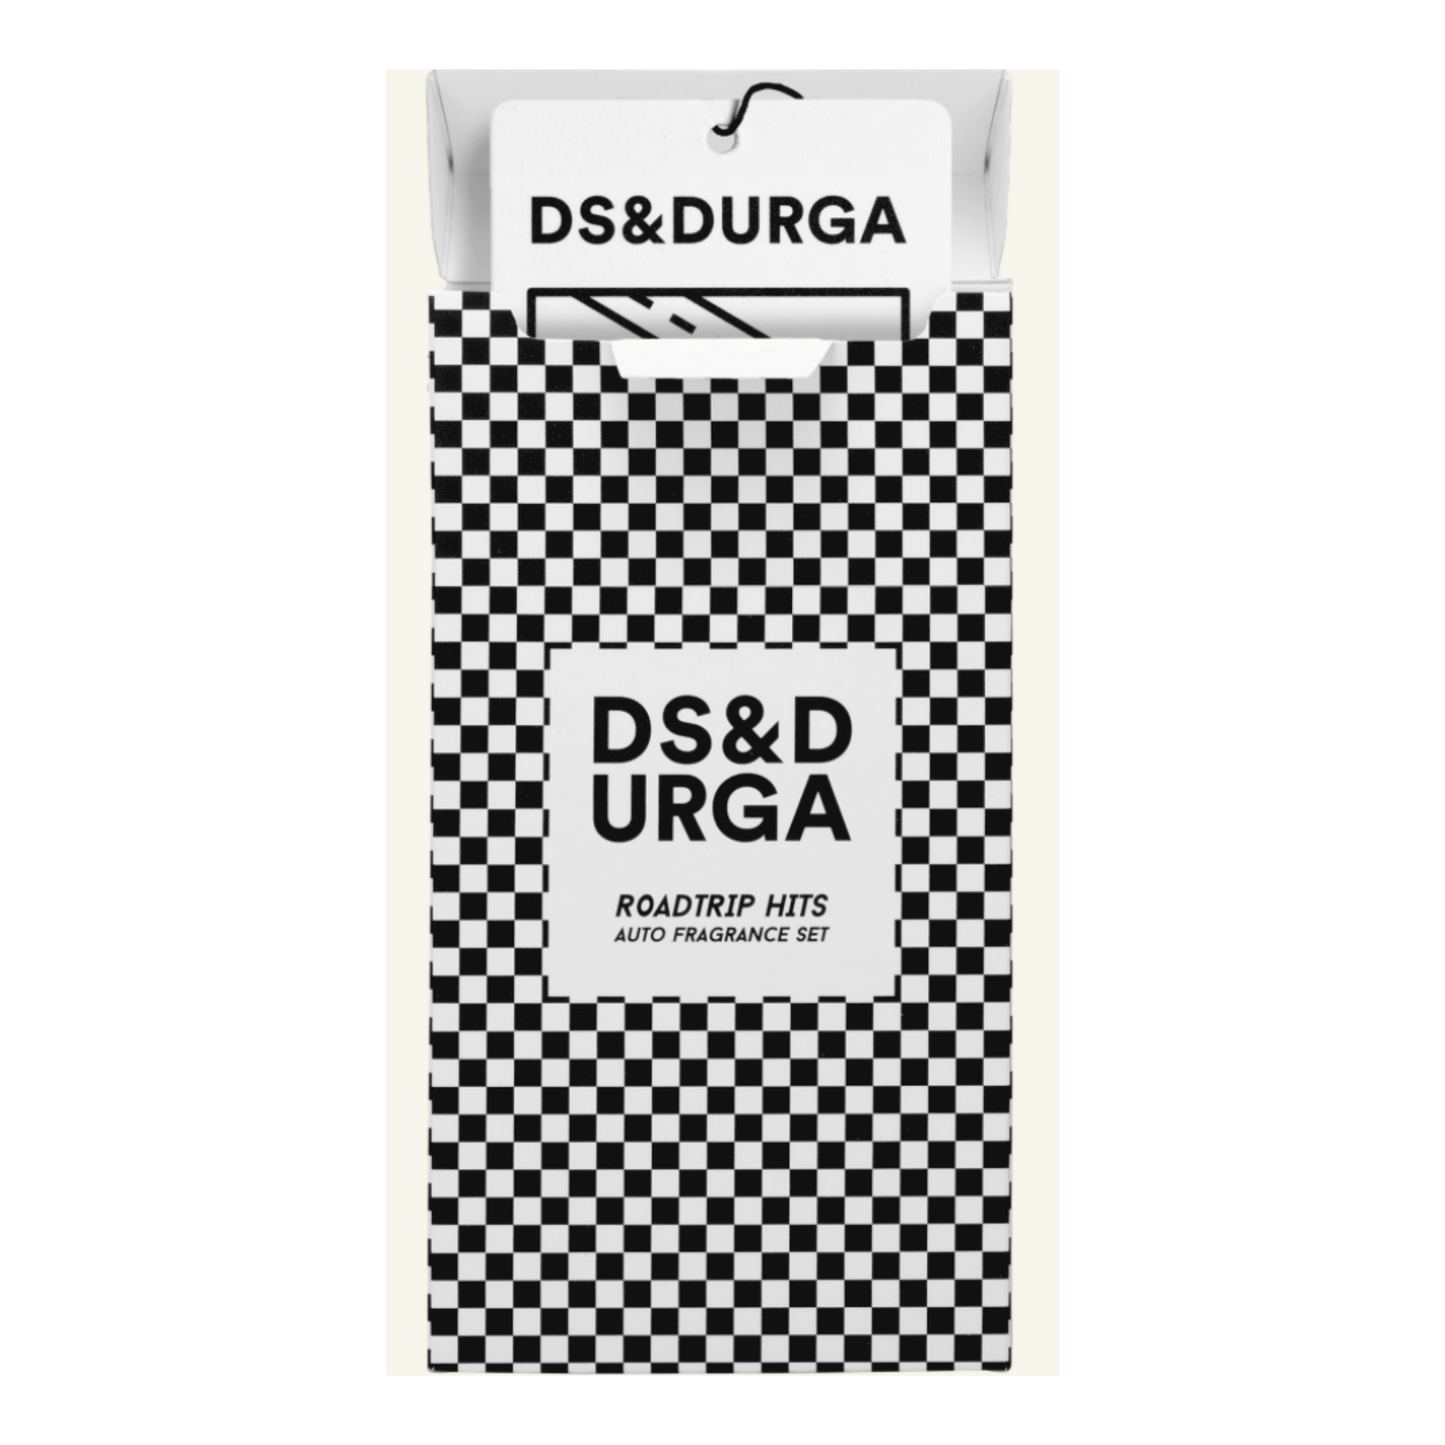 Primary image of D.S. & Durga Roadtrip Hits Auto Fragrance Set 